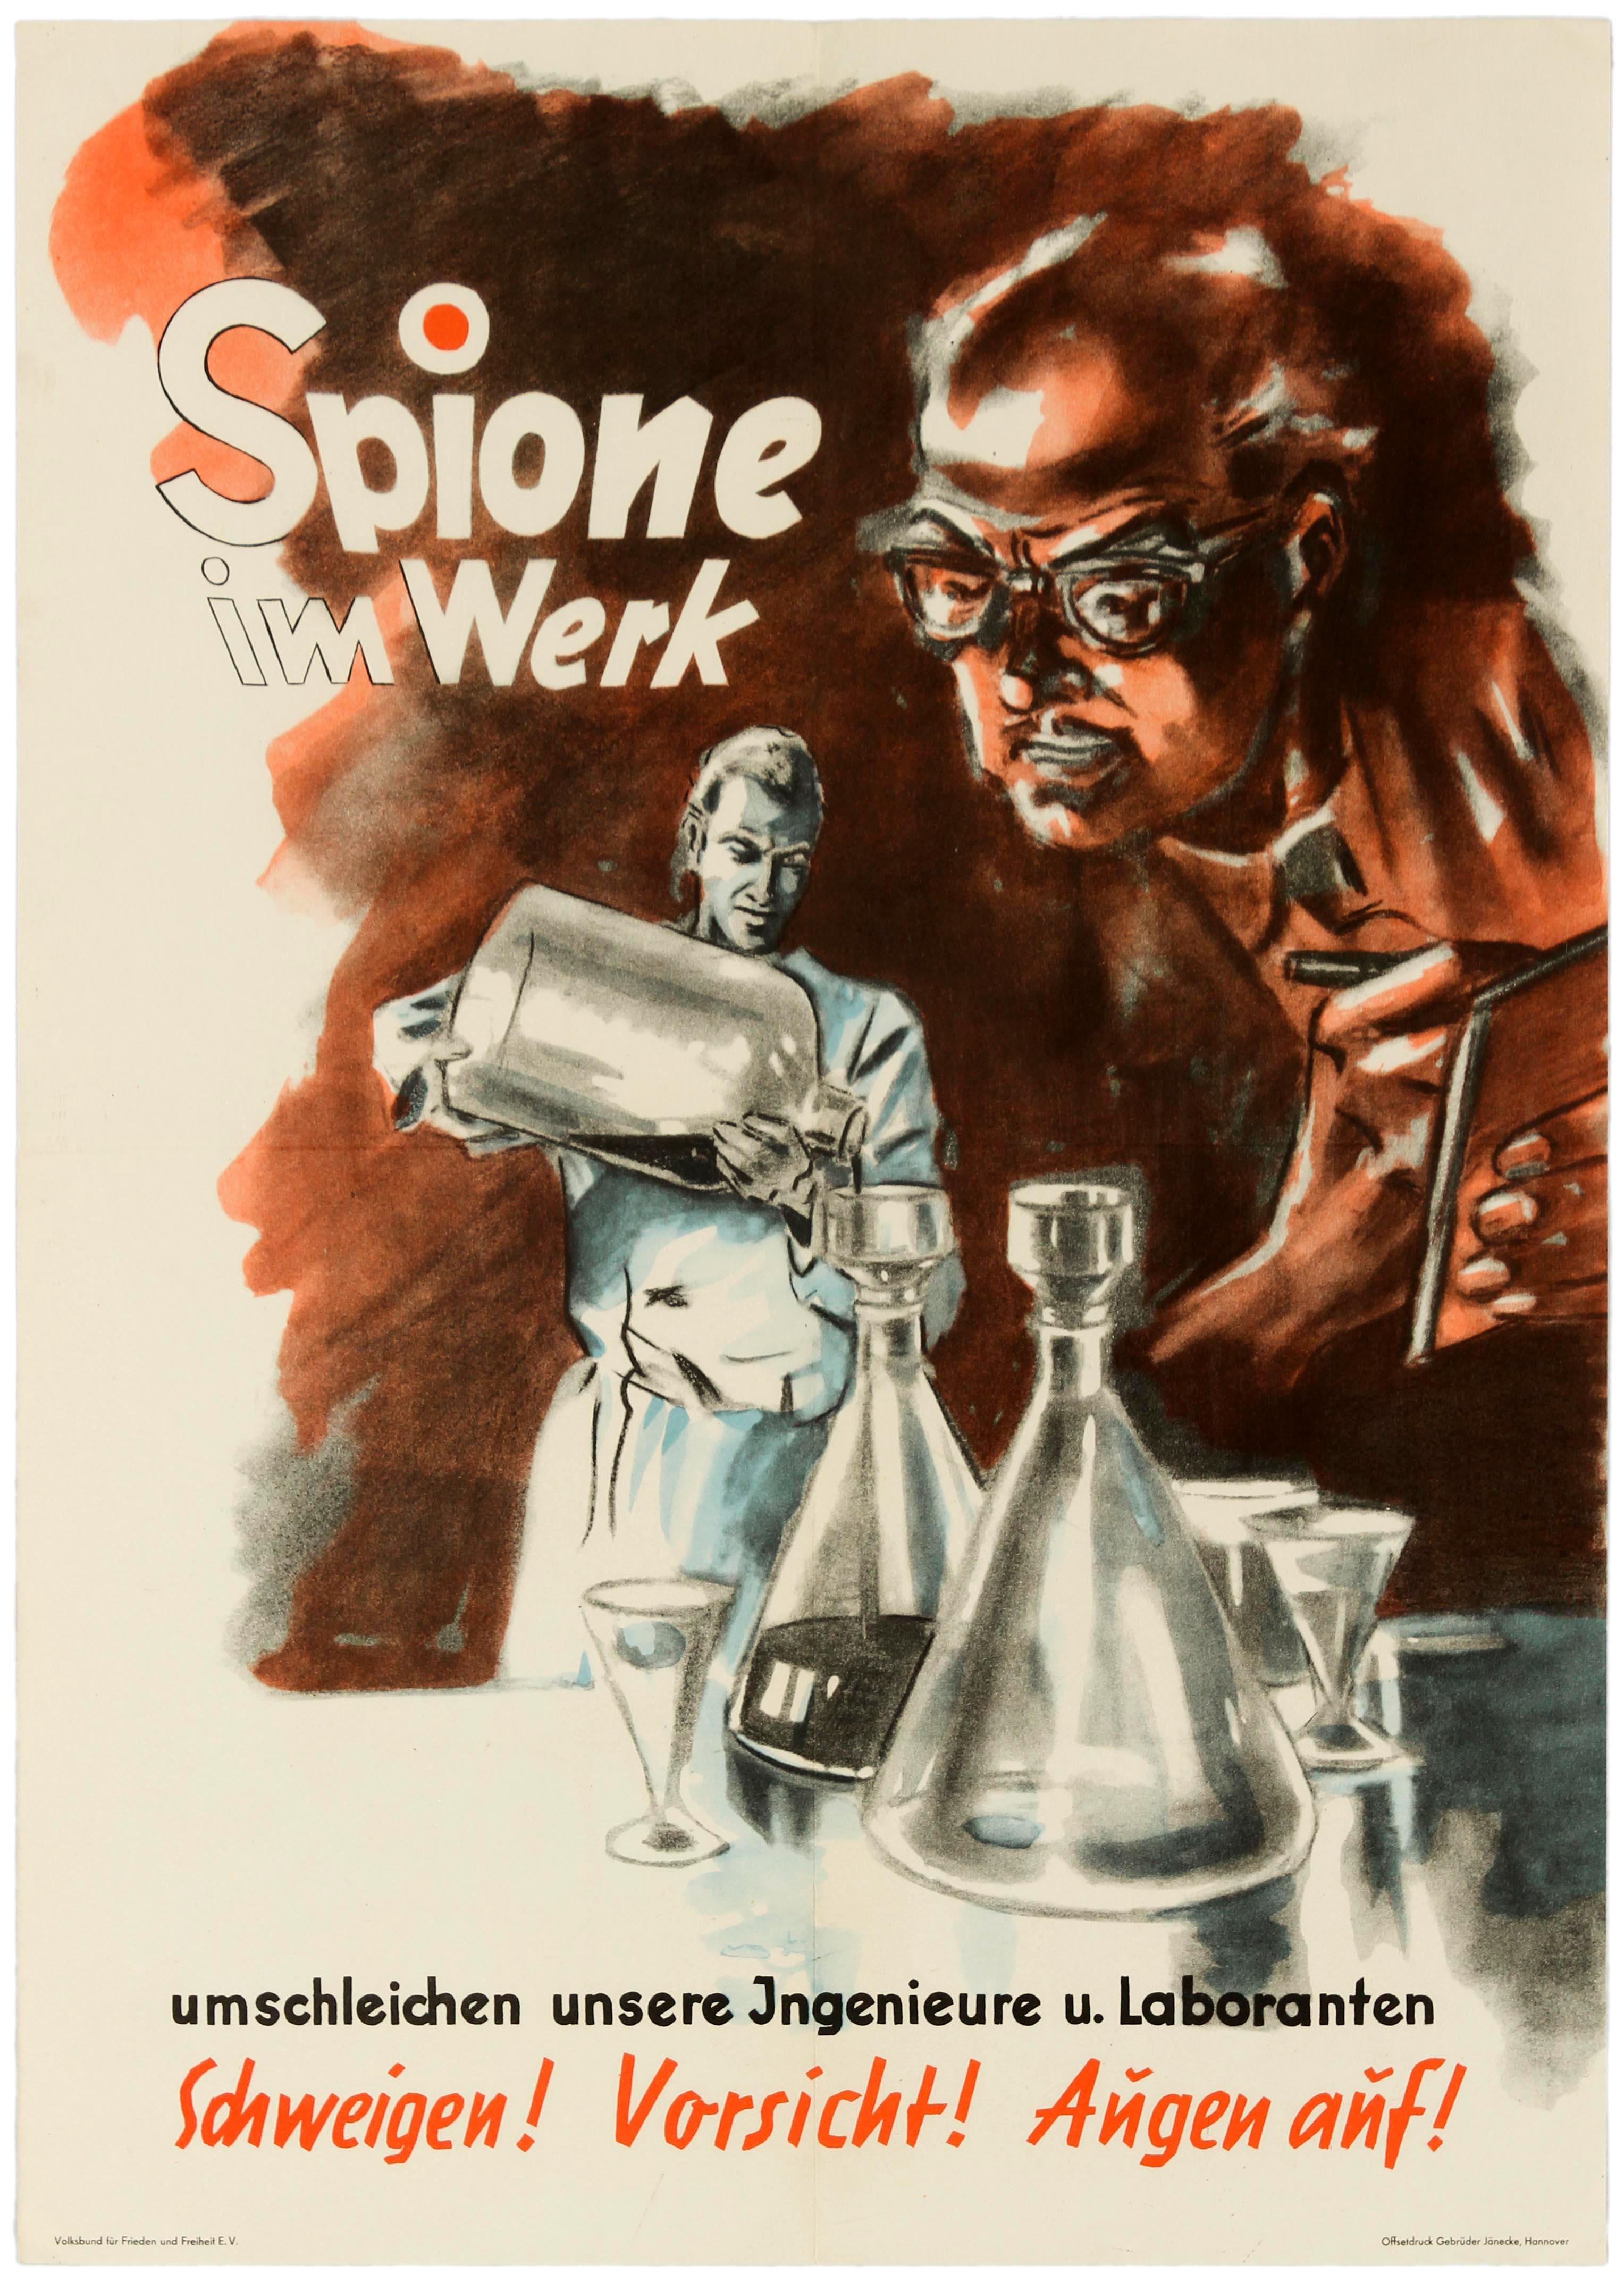 Print Unknown - Affiche vintage d'origine Espions au travail « Spione Im Wer » – Propagande allemande pendant la Guerre froide